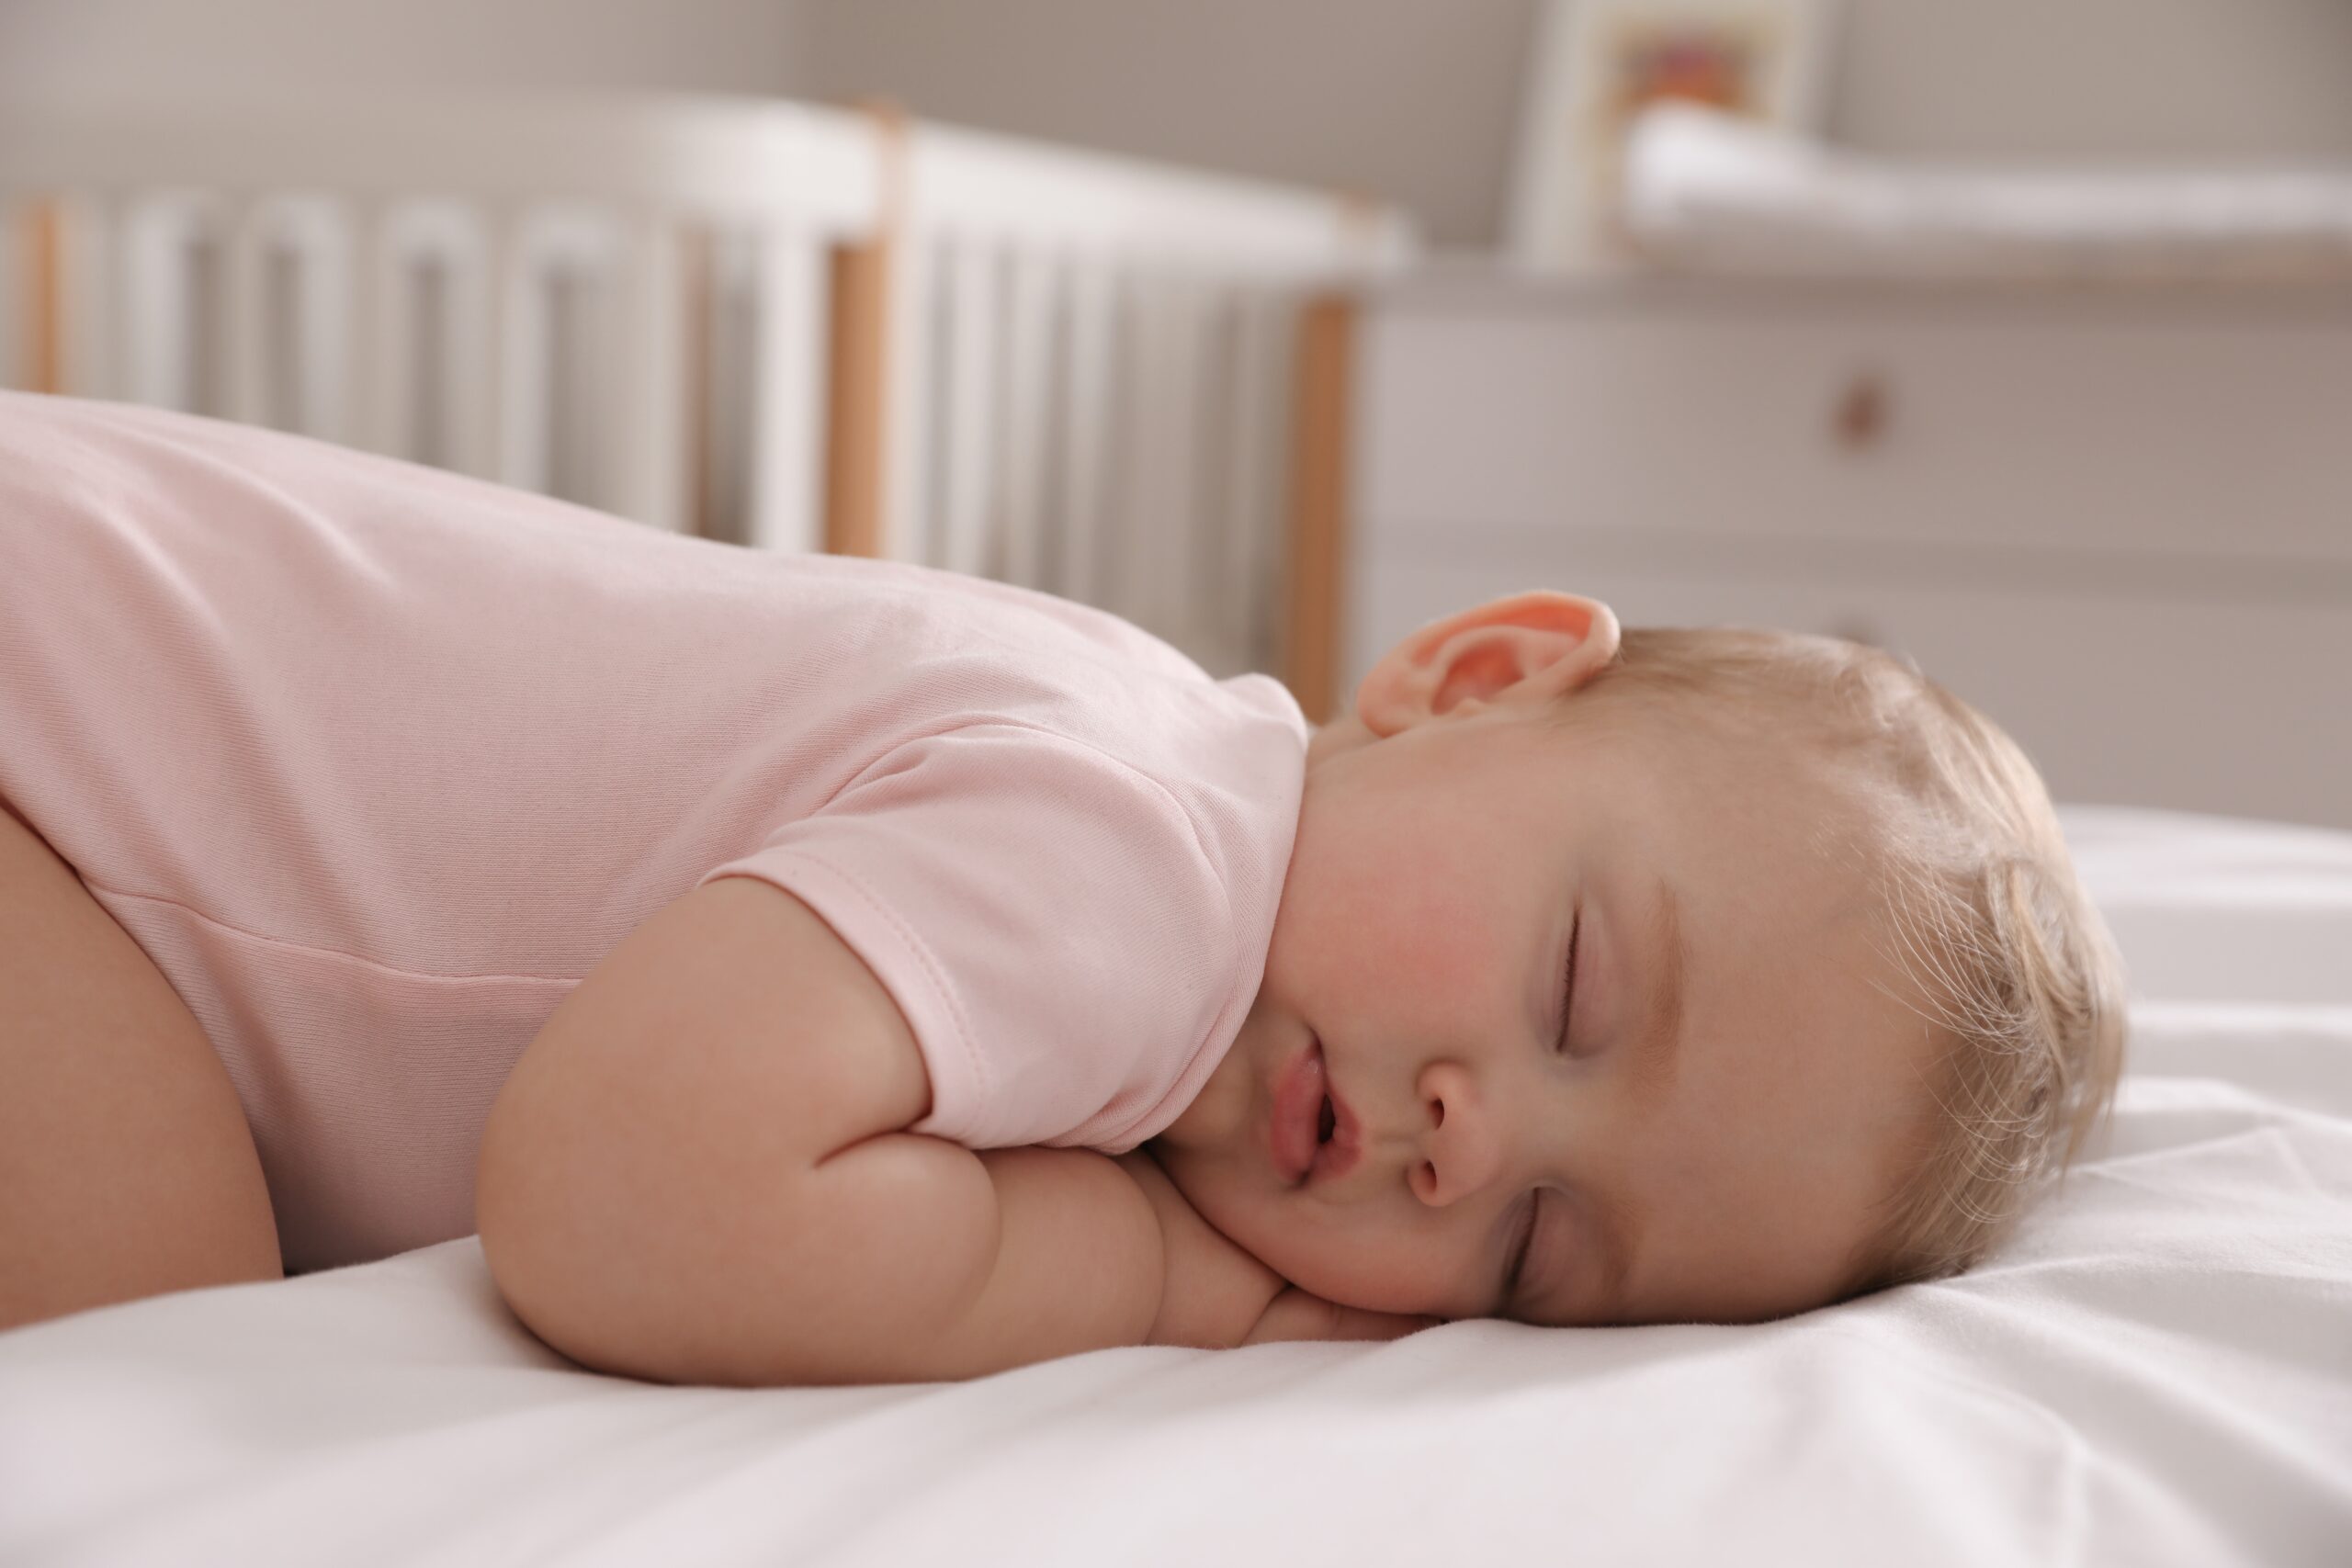 Baby Rolls in Sleep? Don't Worry!